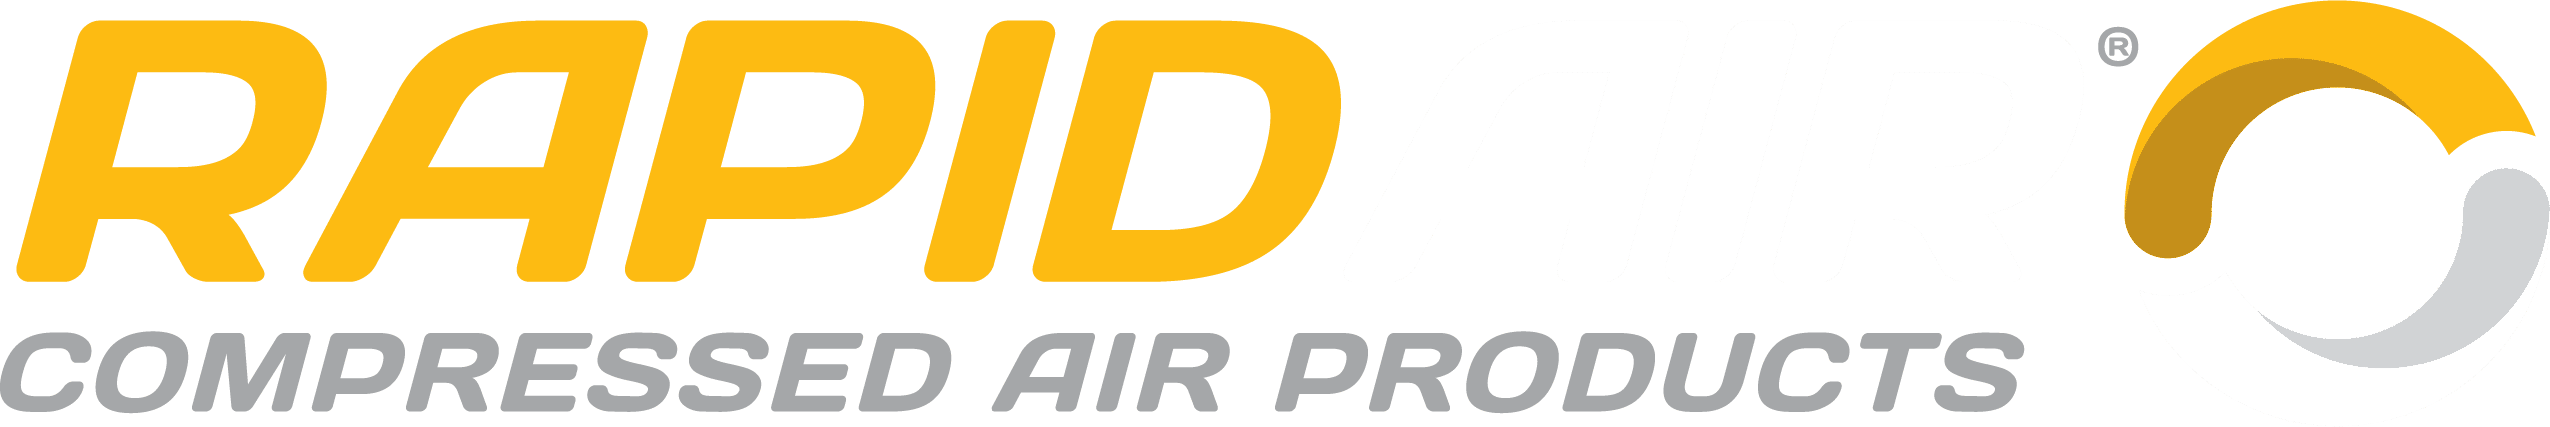 RAPIDAIR Compressed Air Outlet Distribution Kit 90100 – compressor-source